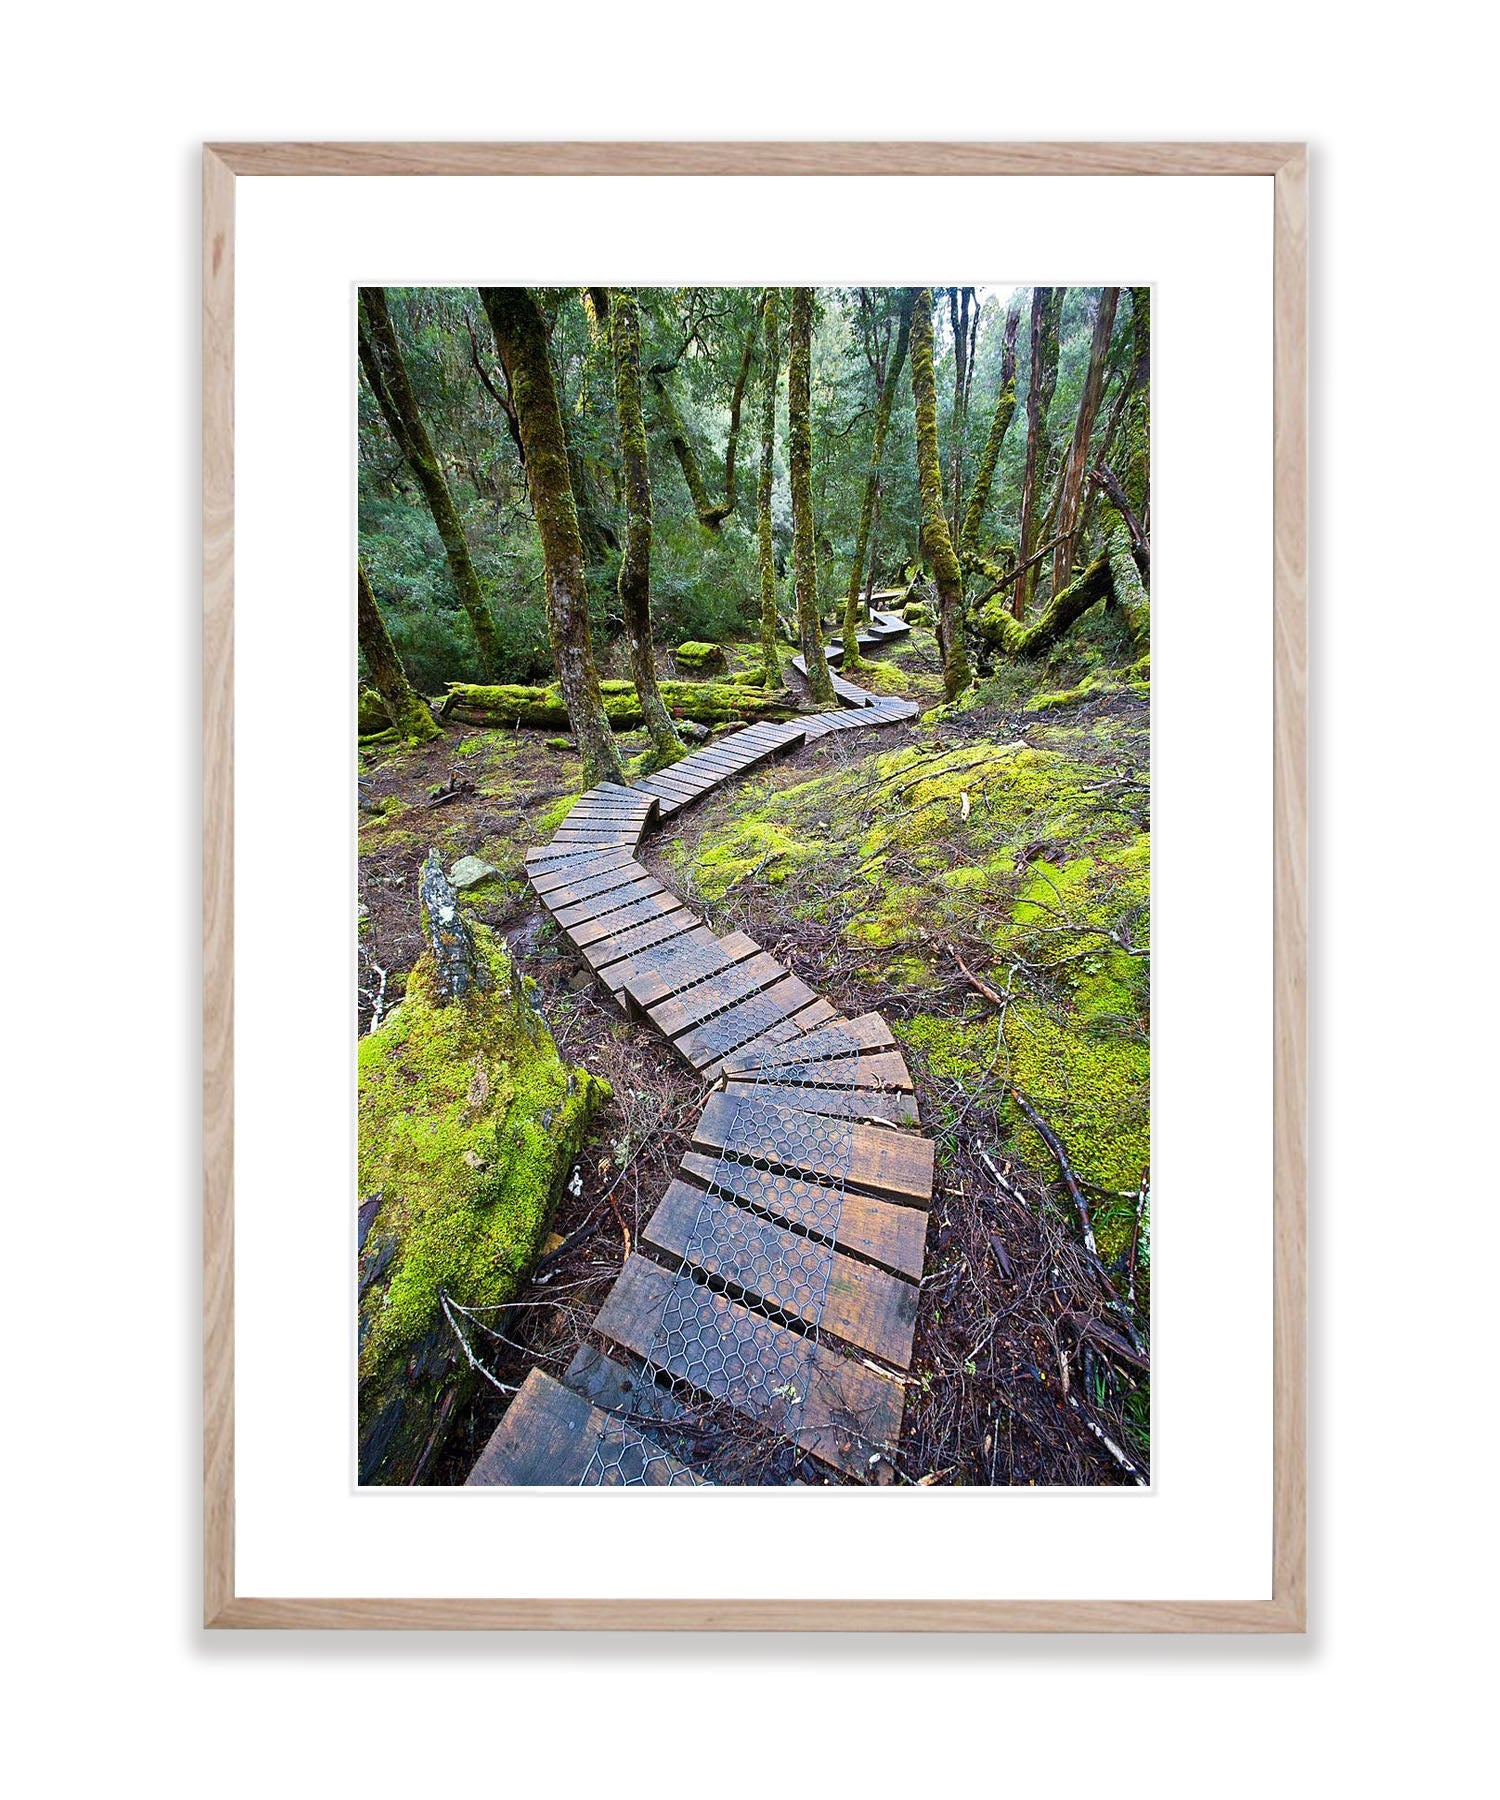 Boardwalk through rainforest, Cradle Mountain, Tasmania